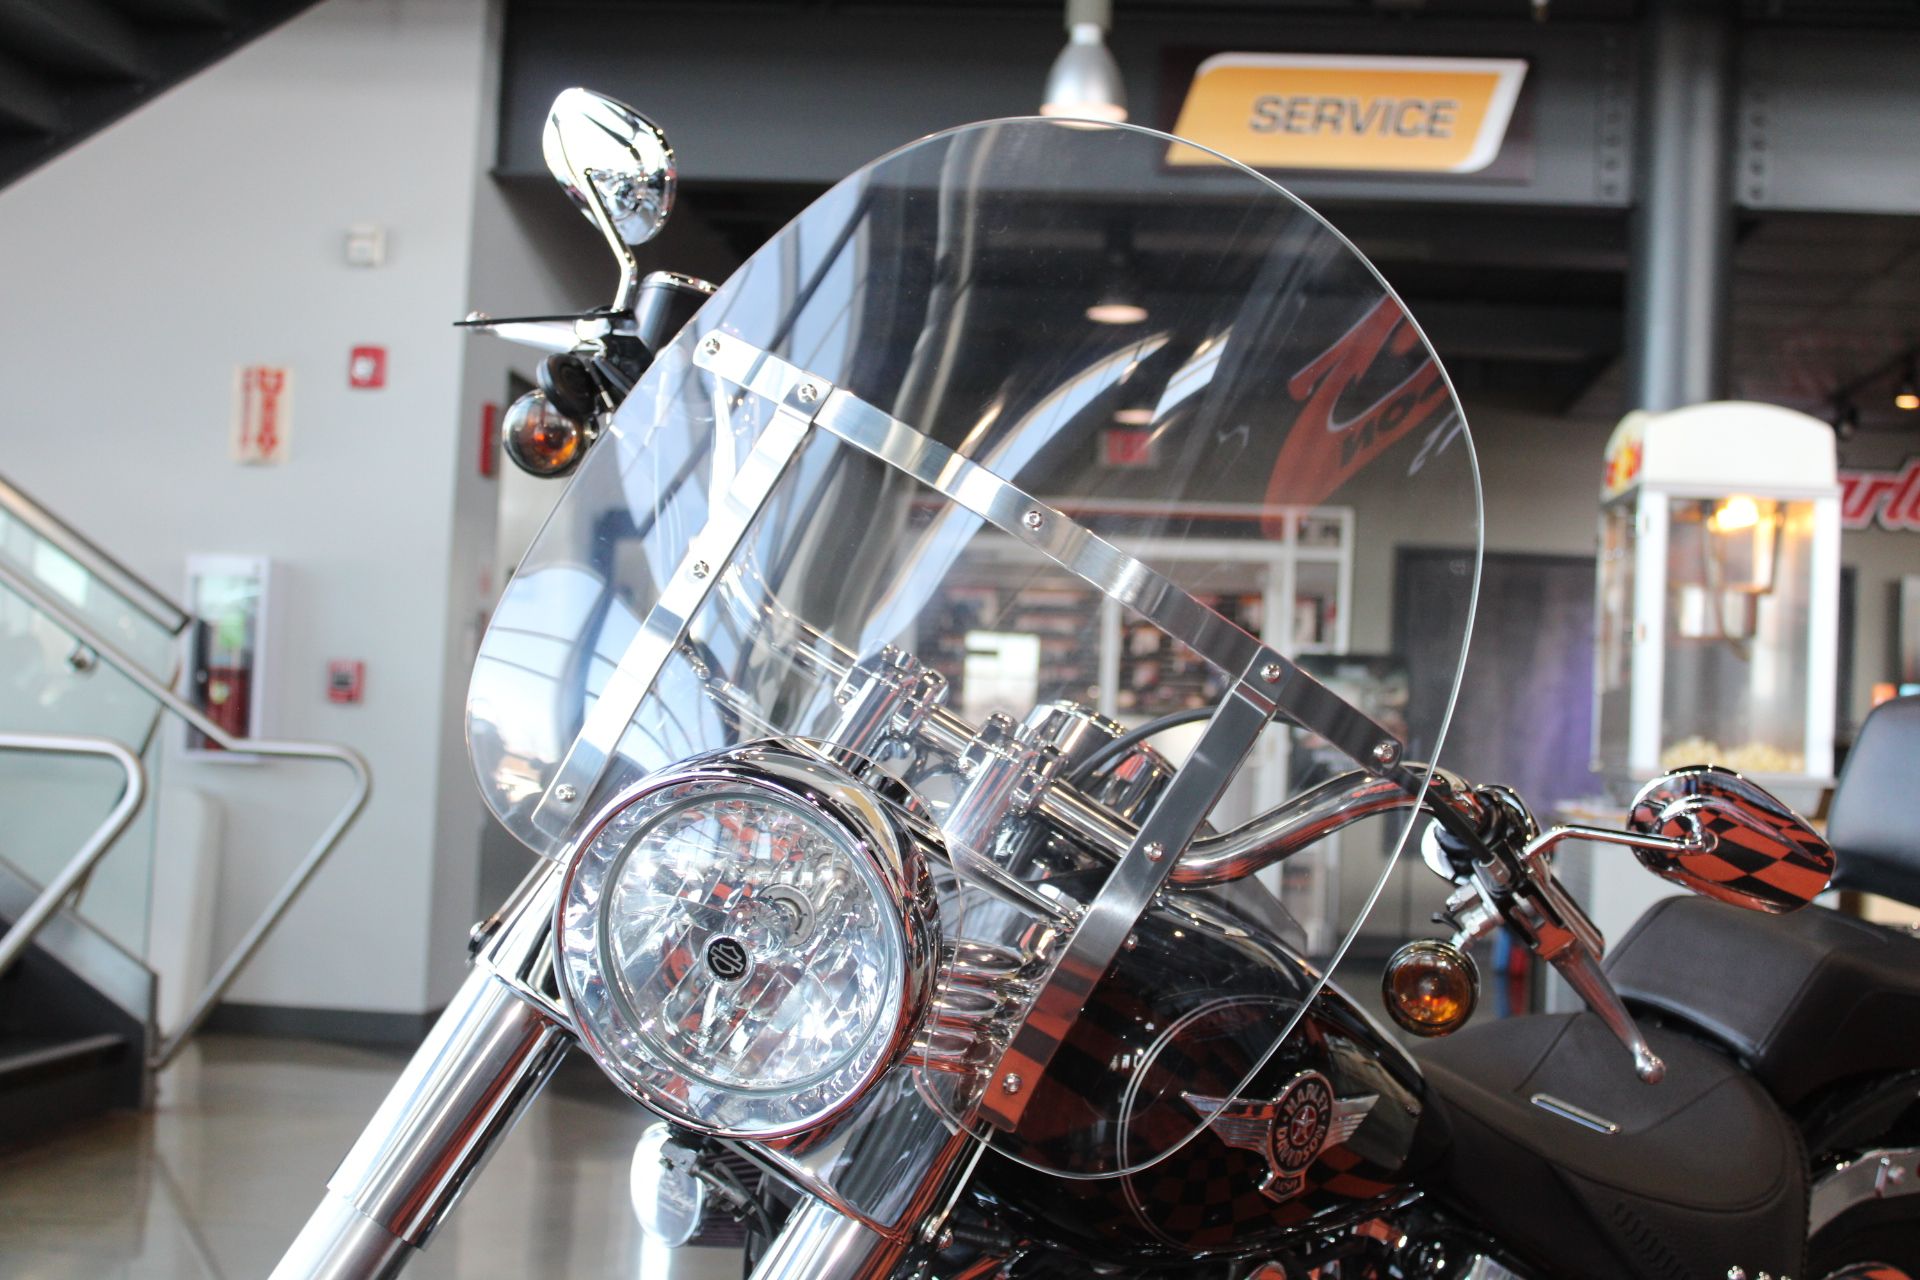 2011 Harley-Davidson Softail® Fat Boy® in Shorewood, Illinois - Photo 22